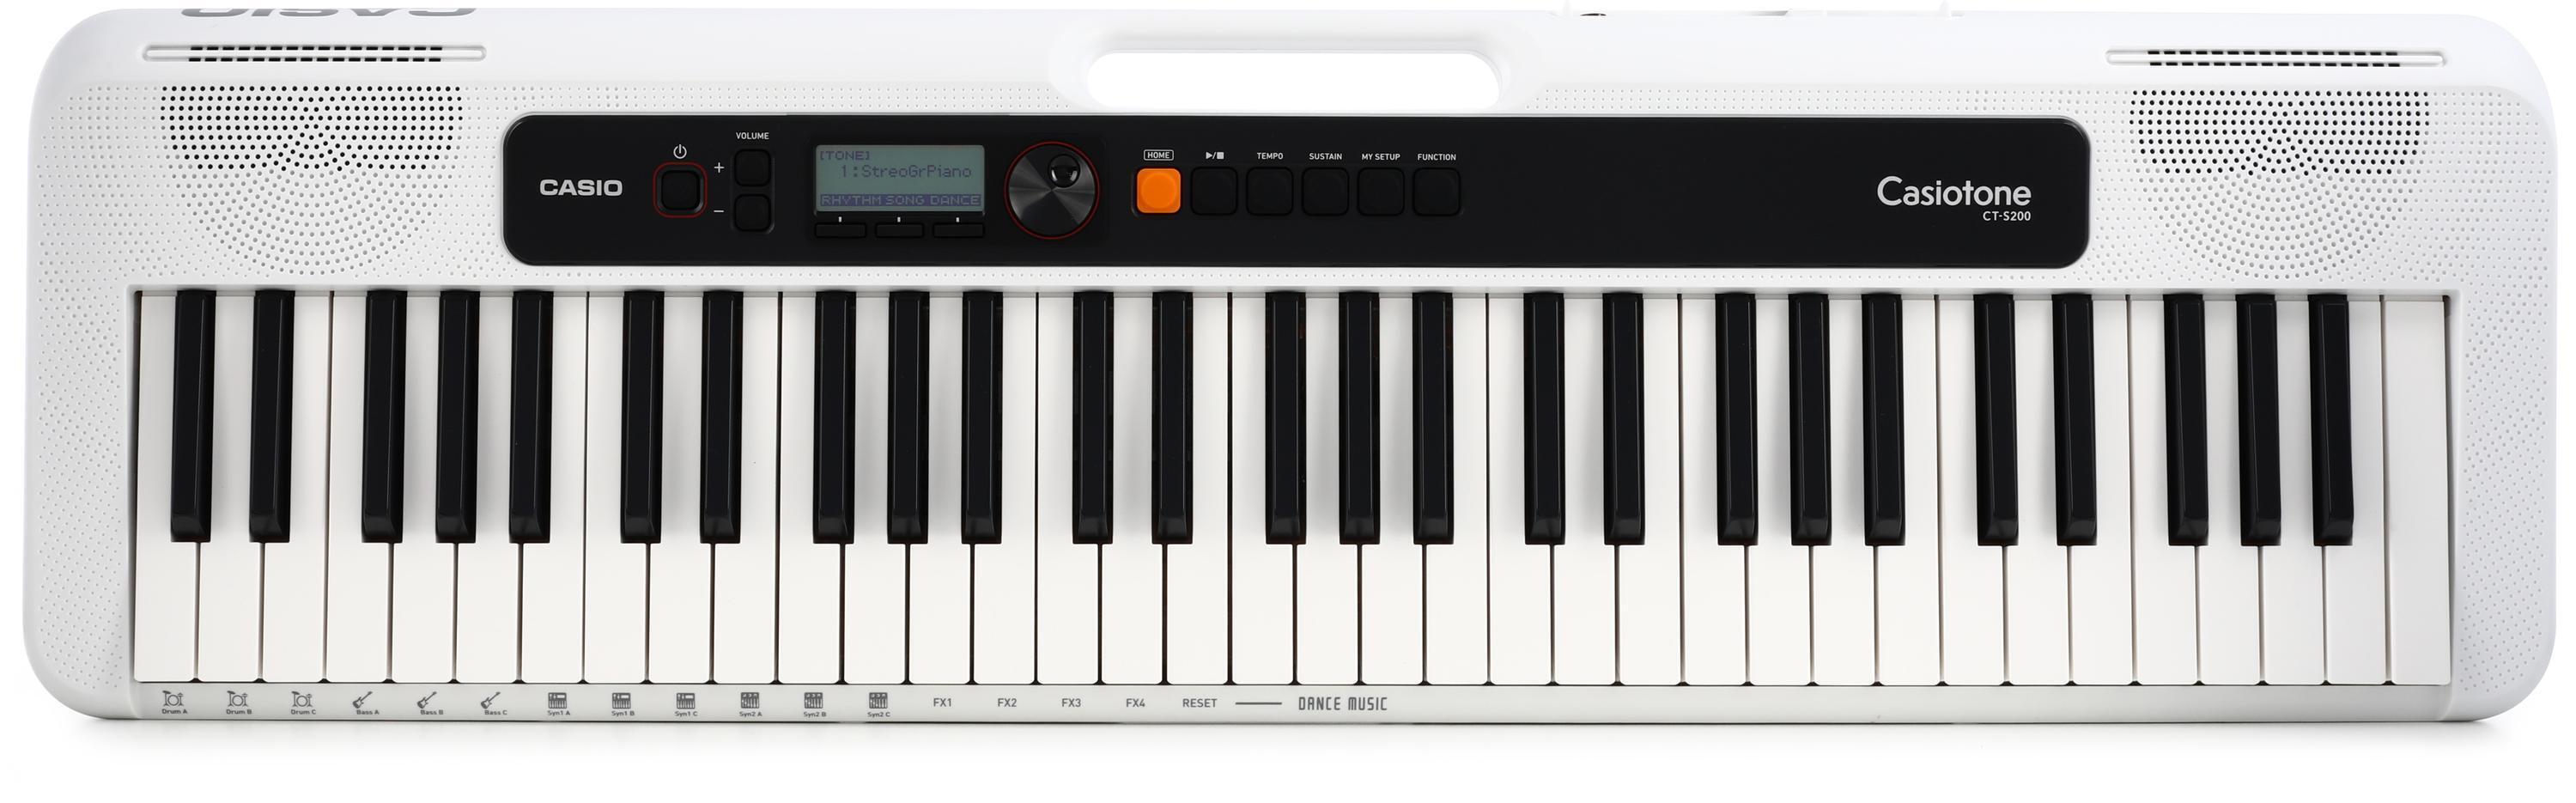 Casio Casiotone CT-S200 61-key Portable Arranger Keyboard - White